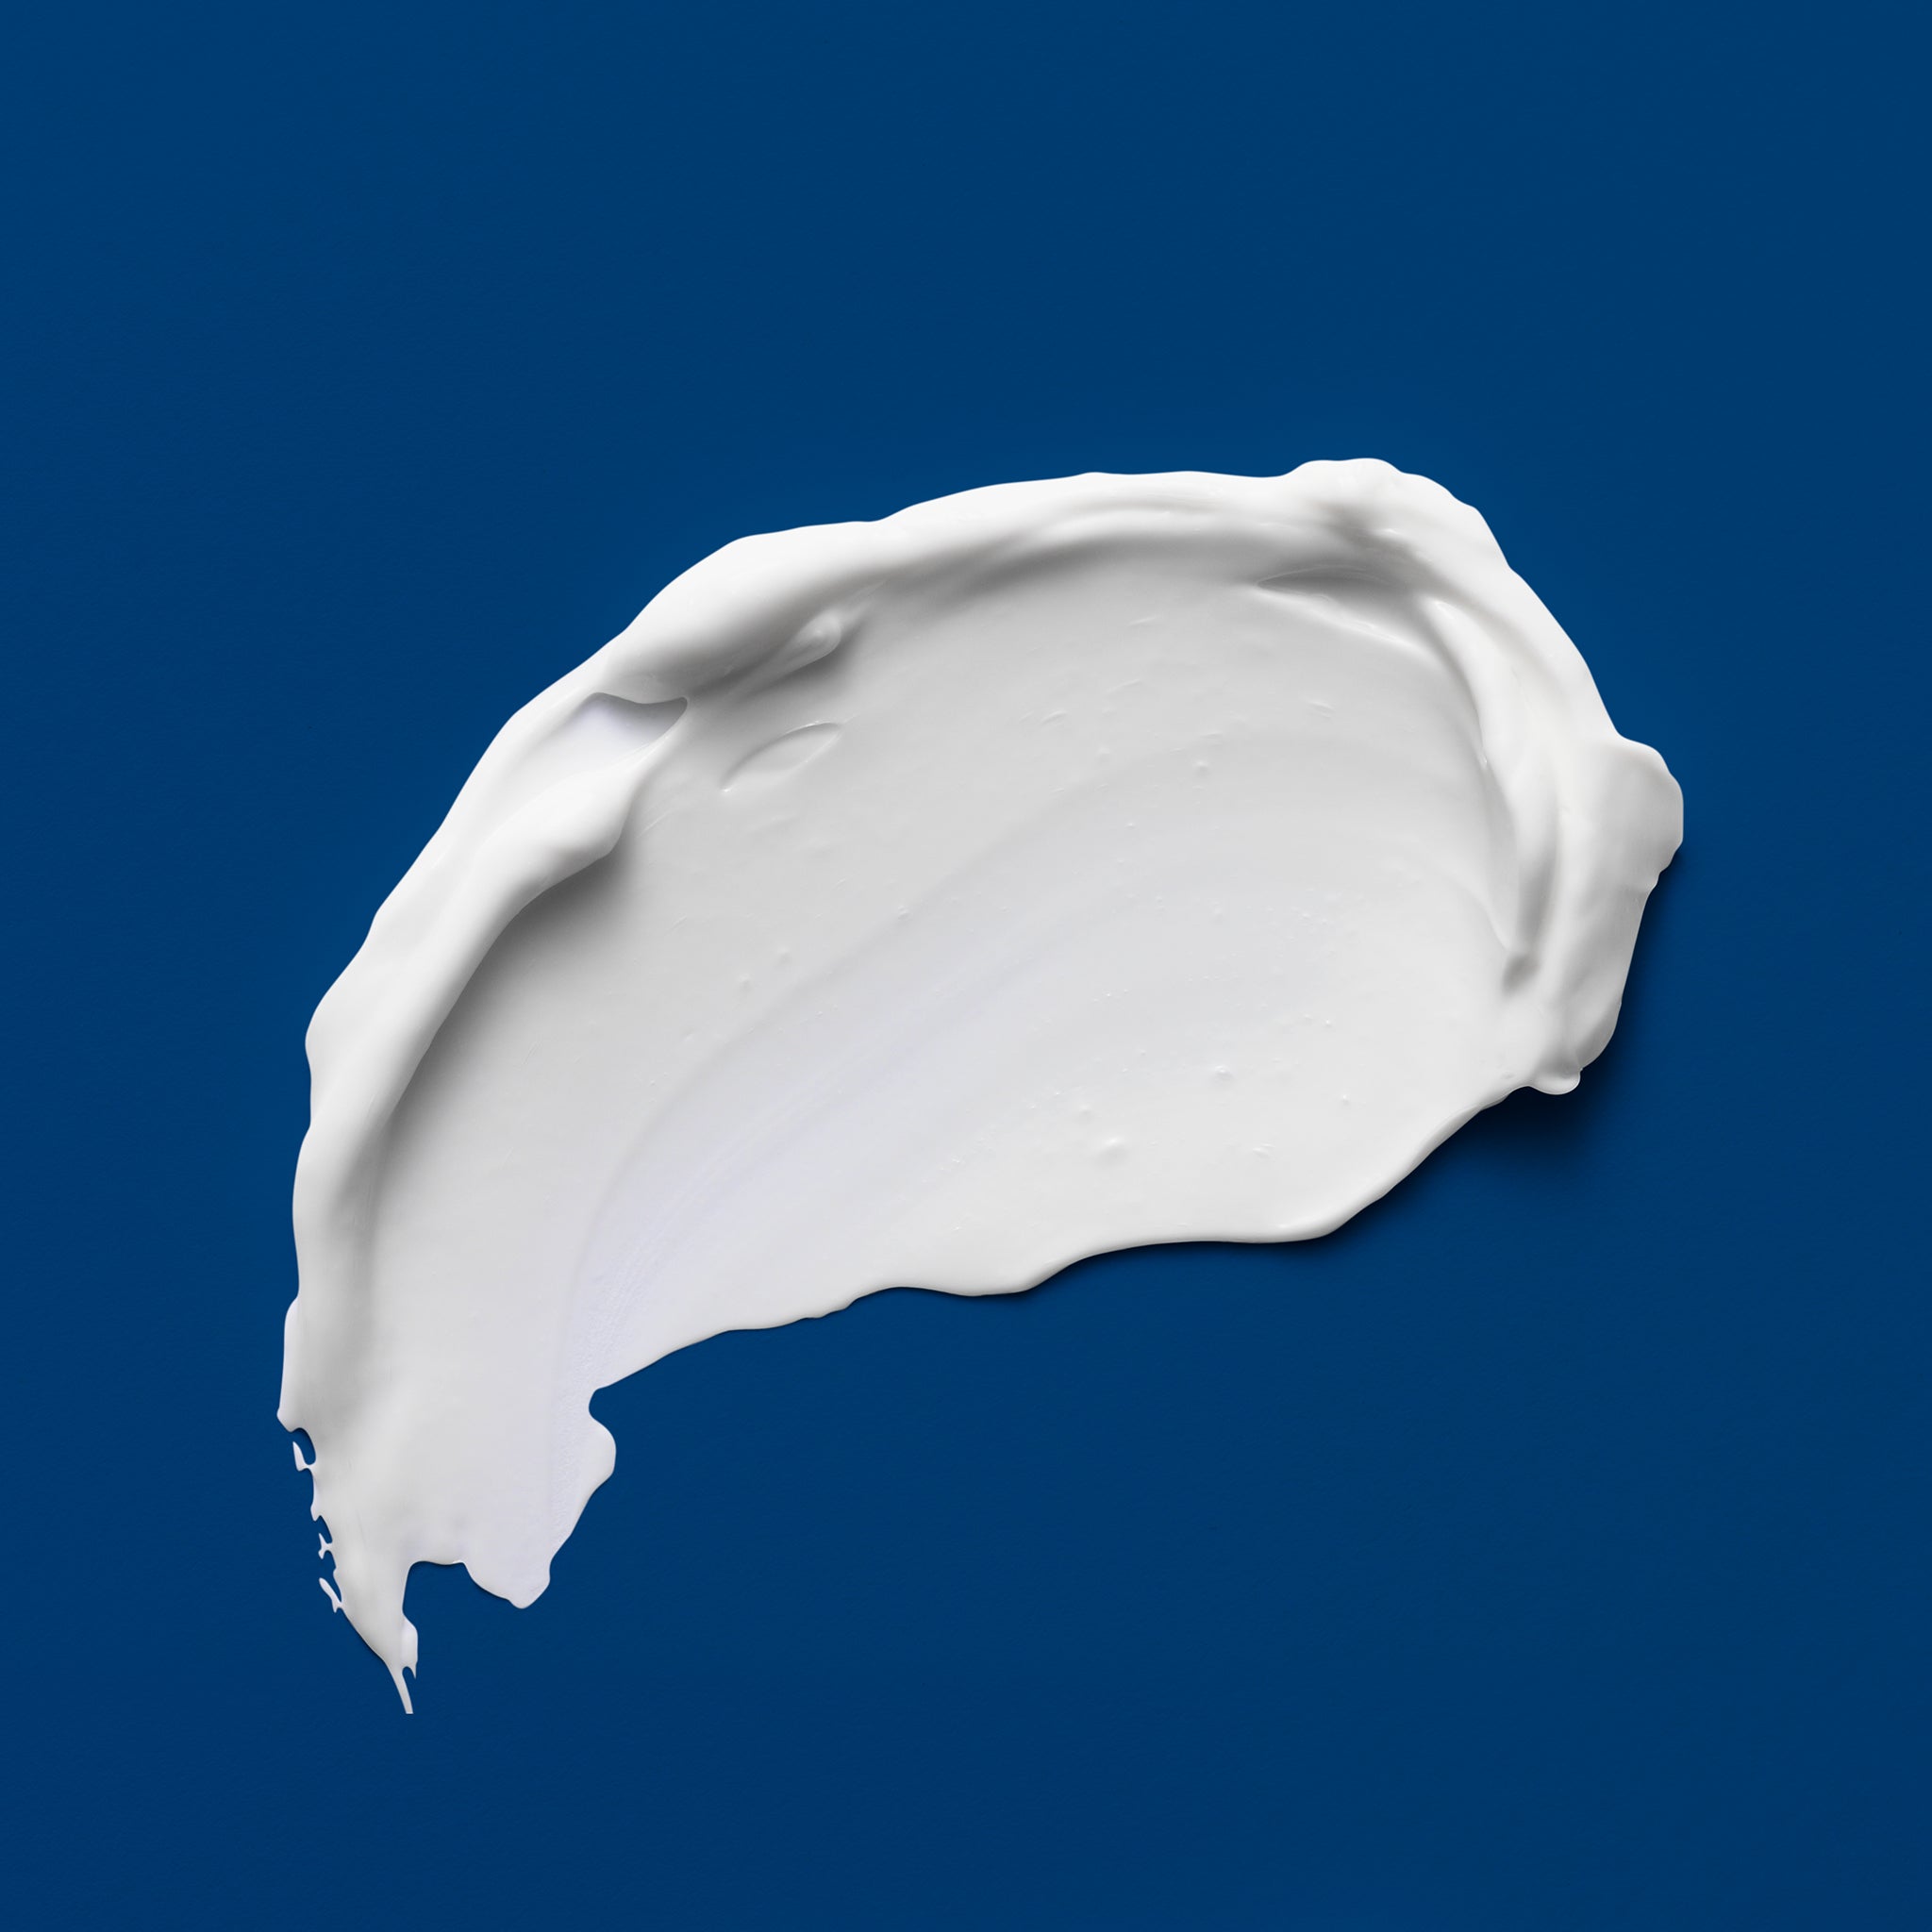 A smear of bright white cream on a dark blue background